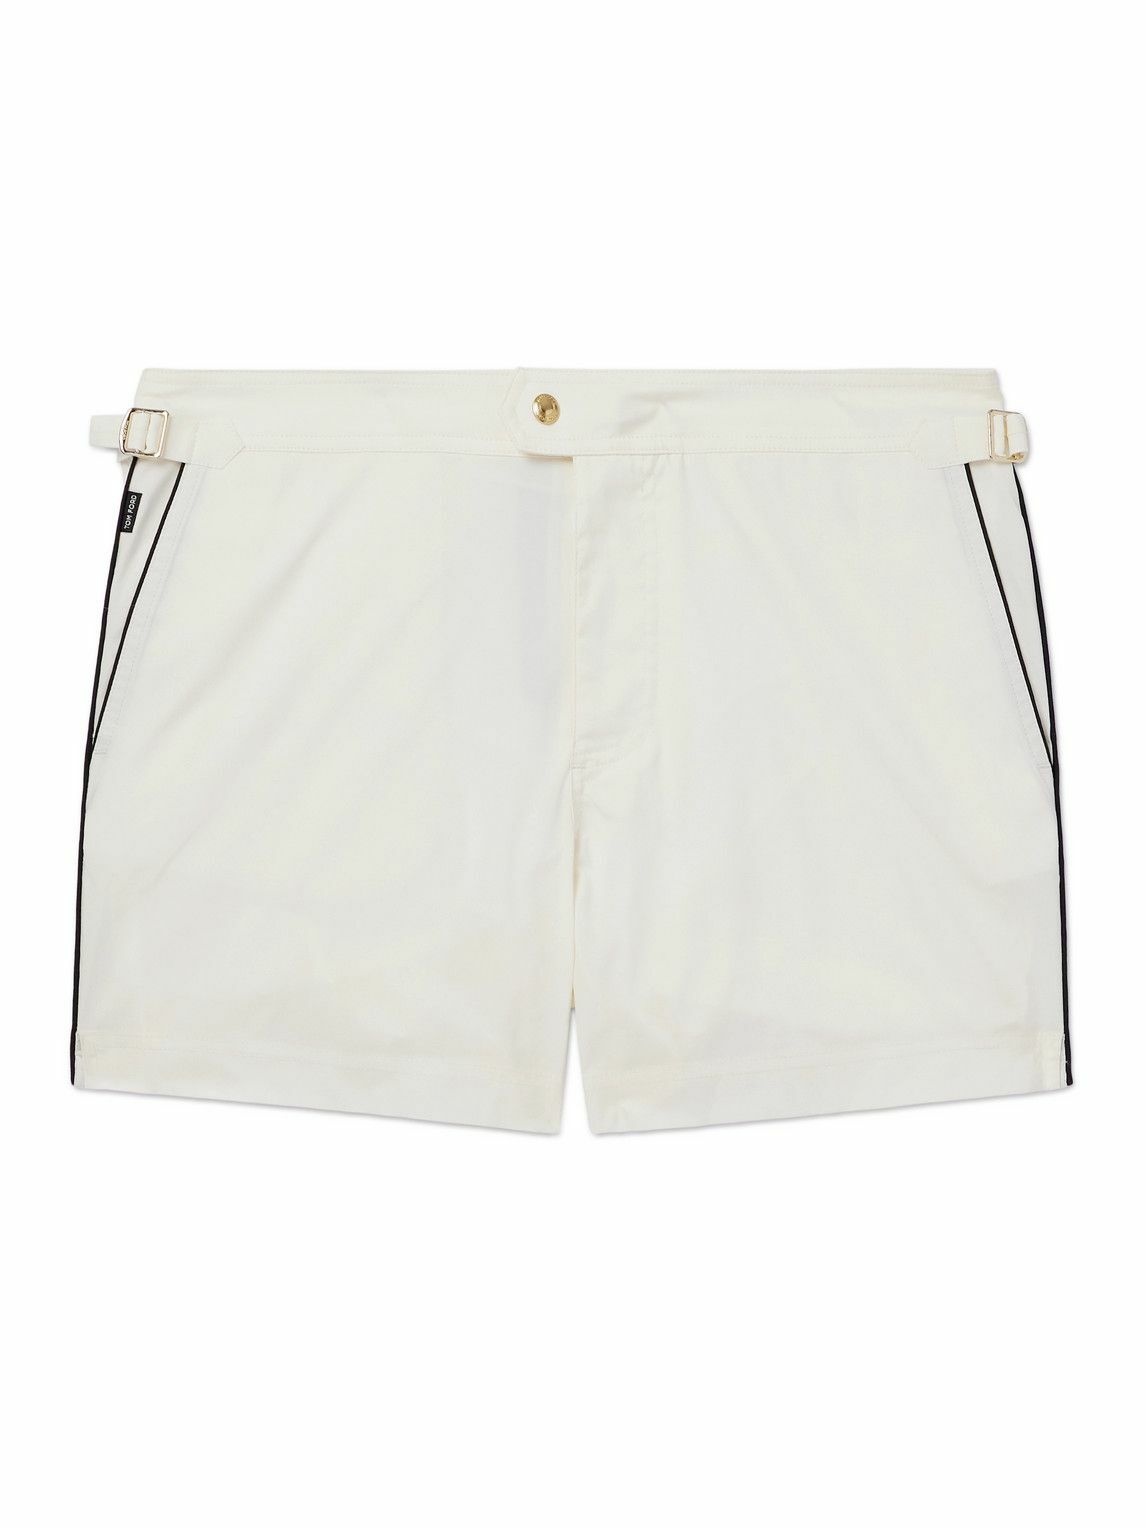 Photo: TOM FORD - Slim-Fit Short-Length Swim Shorts - White